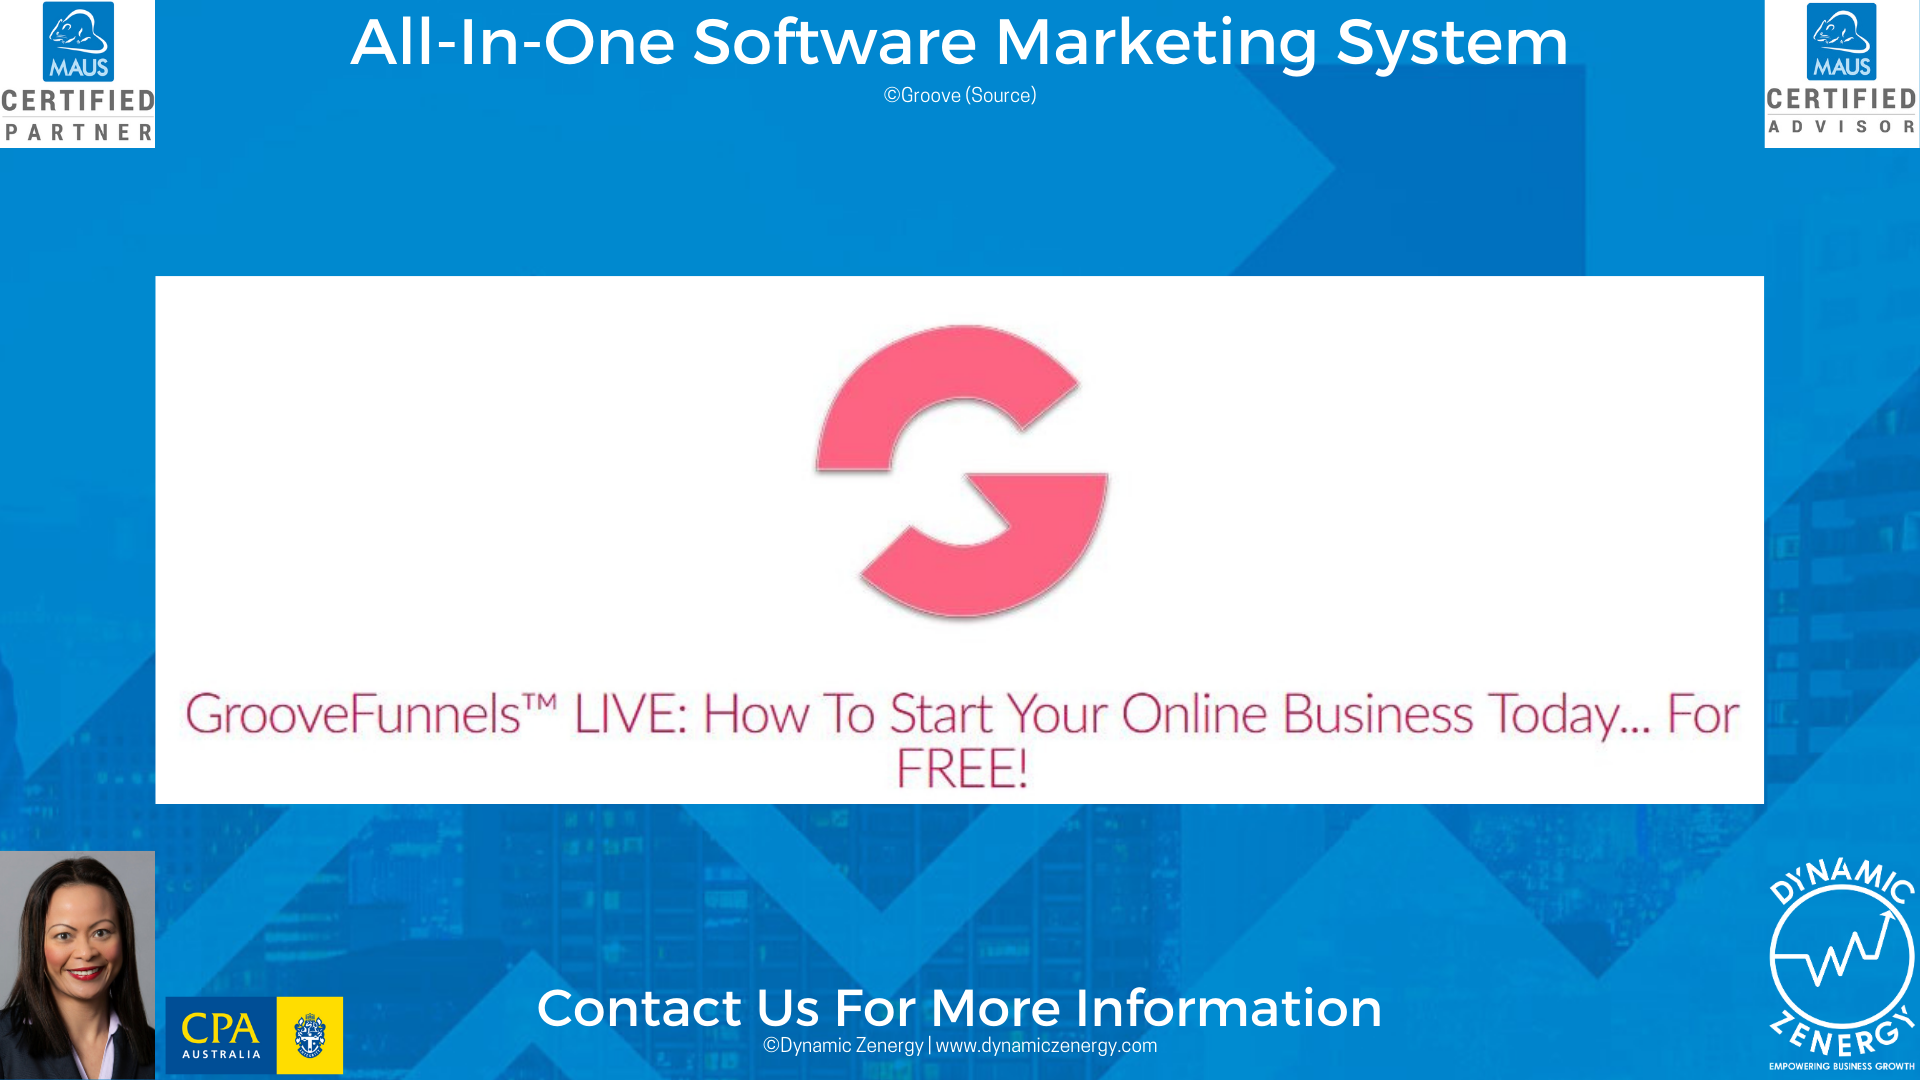 marketing software